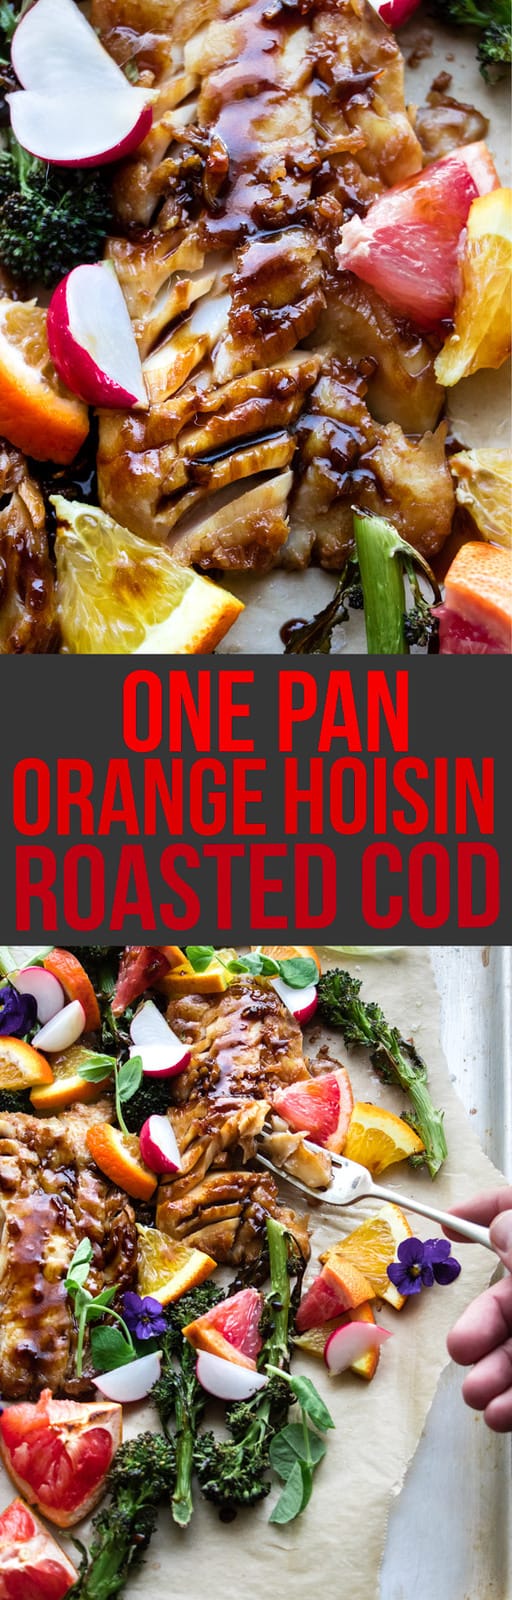 One pan roasted hoisin cod.